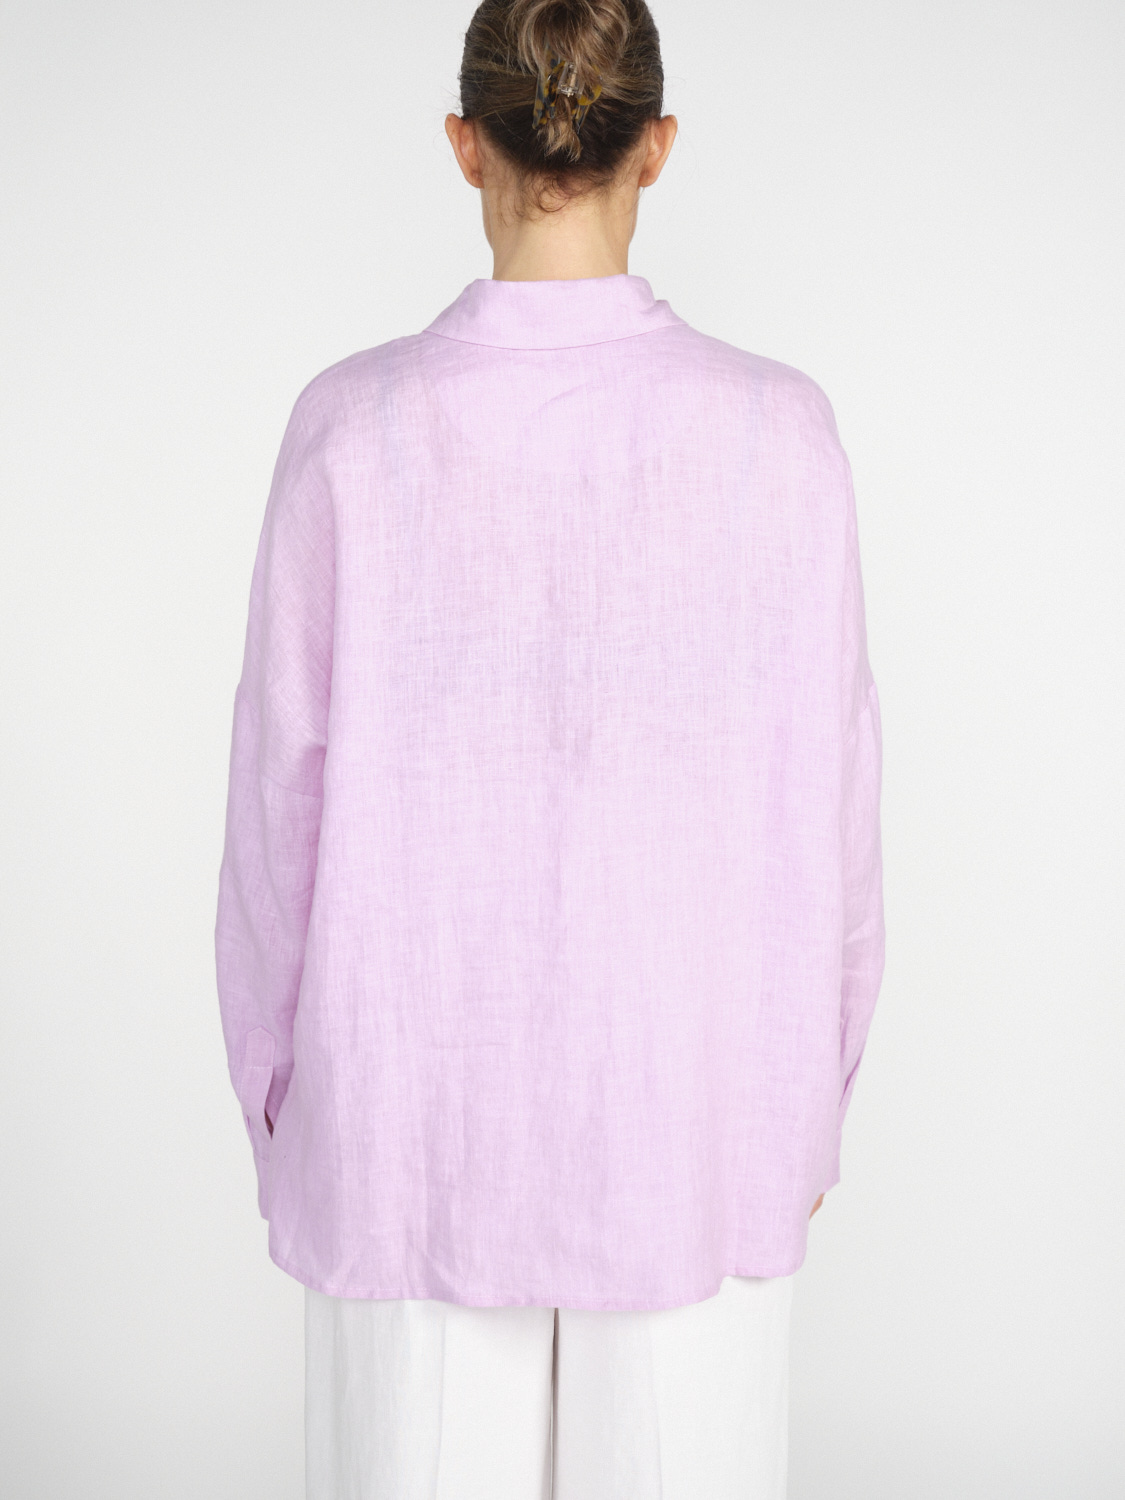 an an londree Summer – Leinen-Bluse mit verspielten Details   rosa XS